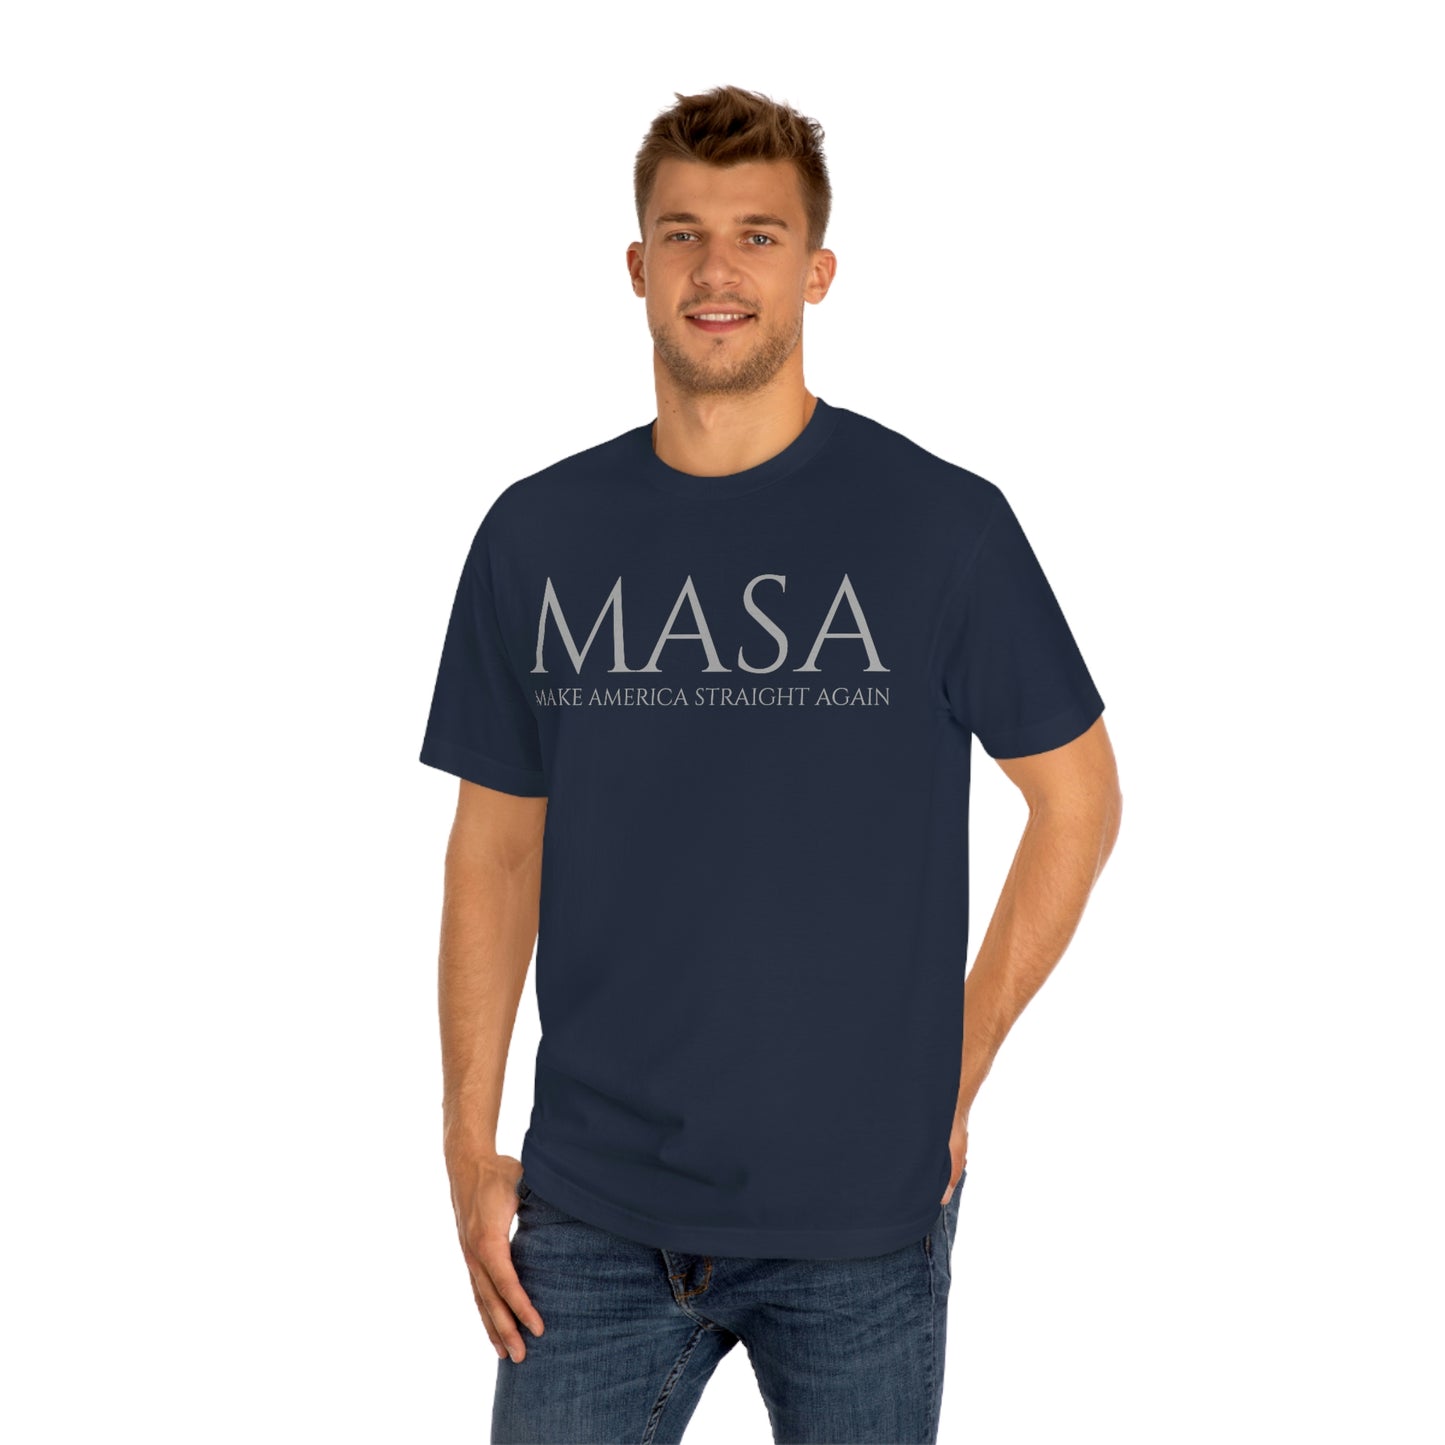 "MASA - Make America Straight Again" Unisex Classic Tee